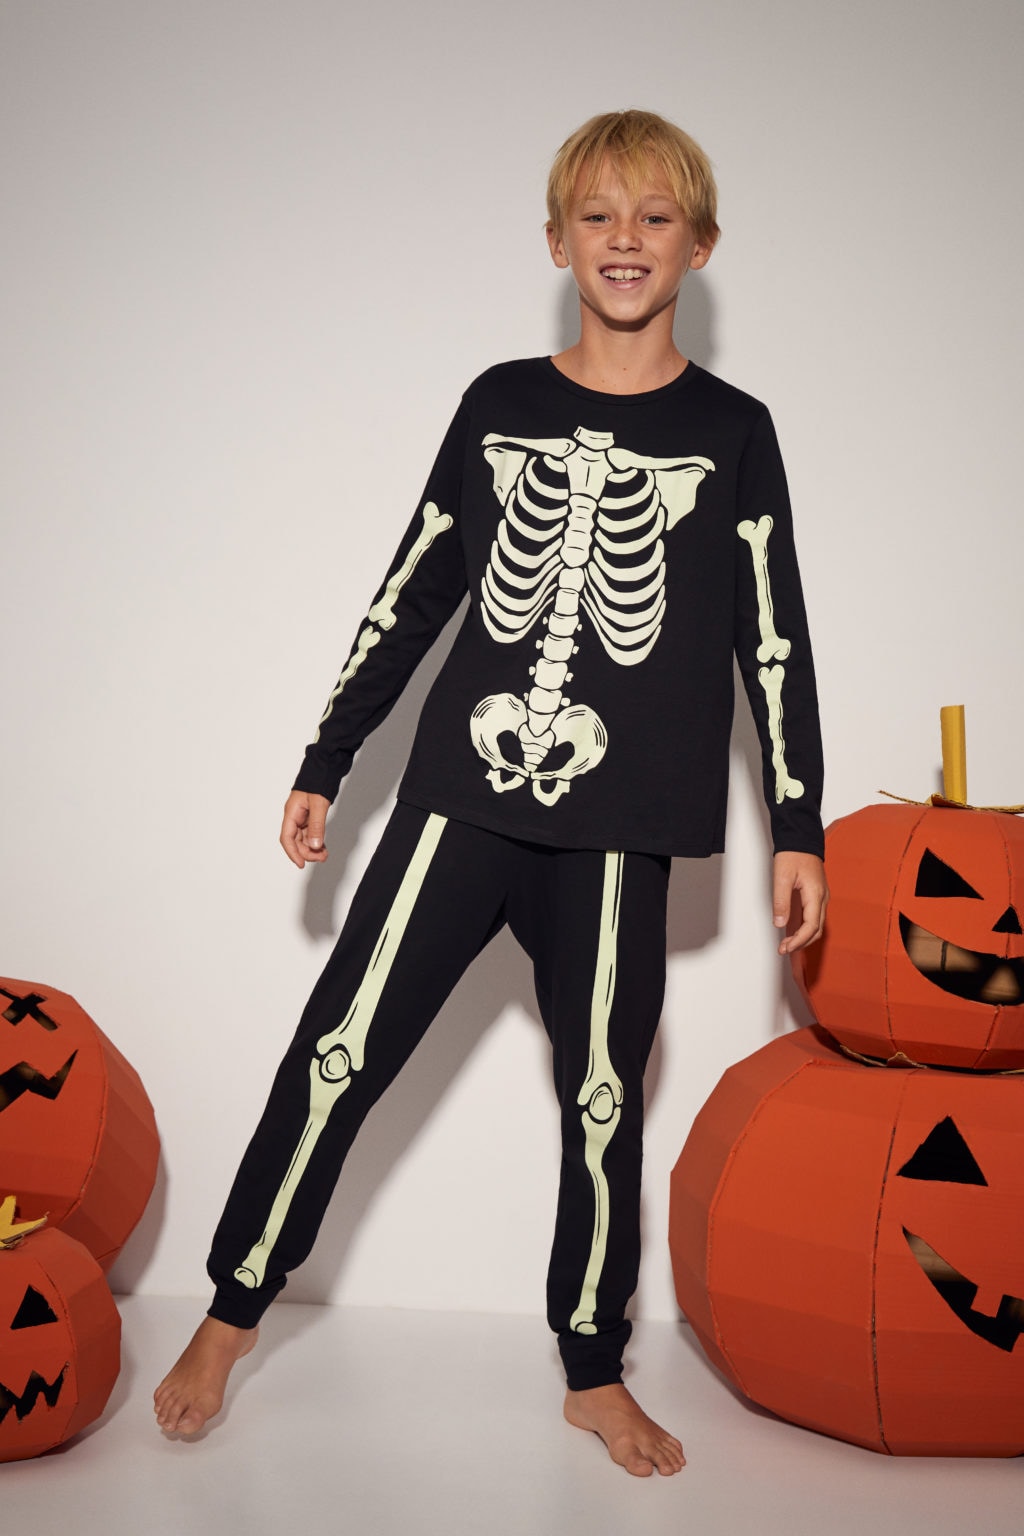 Niño disfrazado de esqueleto de Halloween